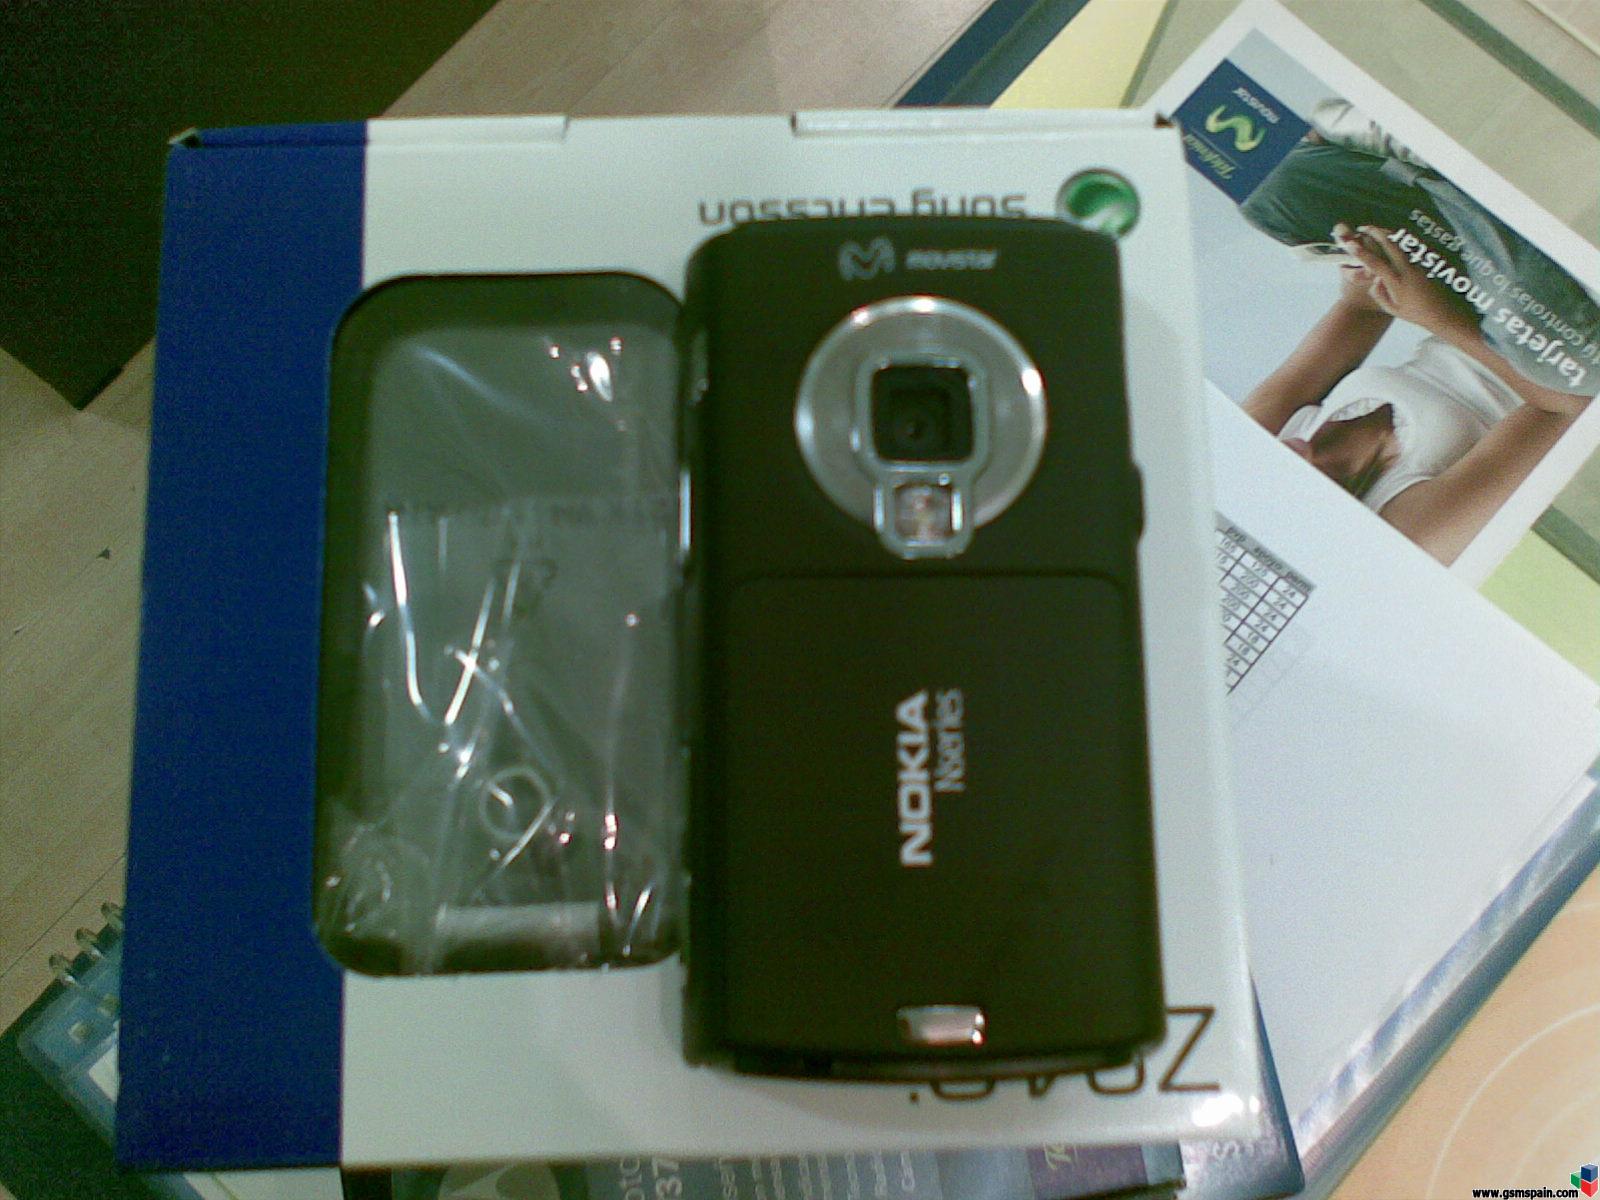 N95 8GB Movistar  xXFOTOSXx